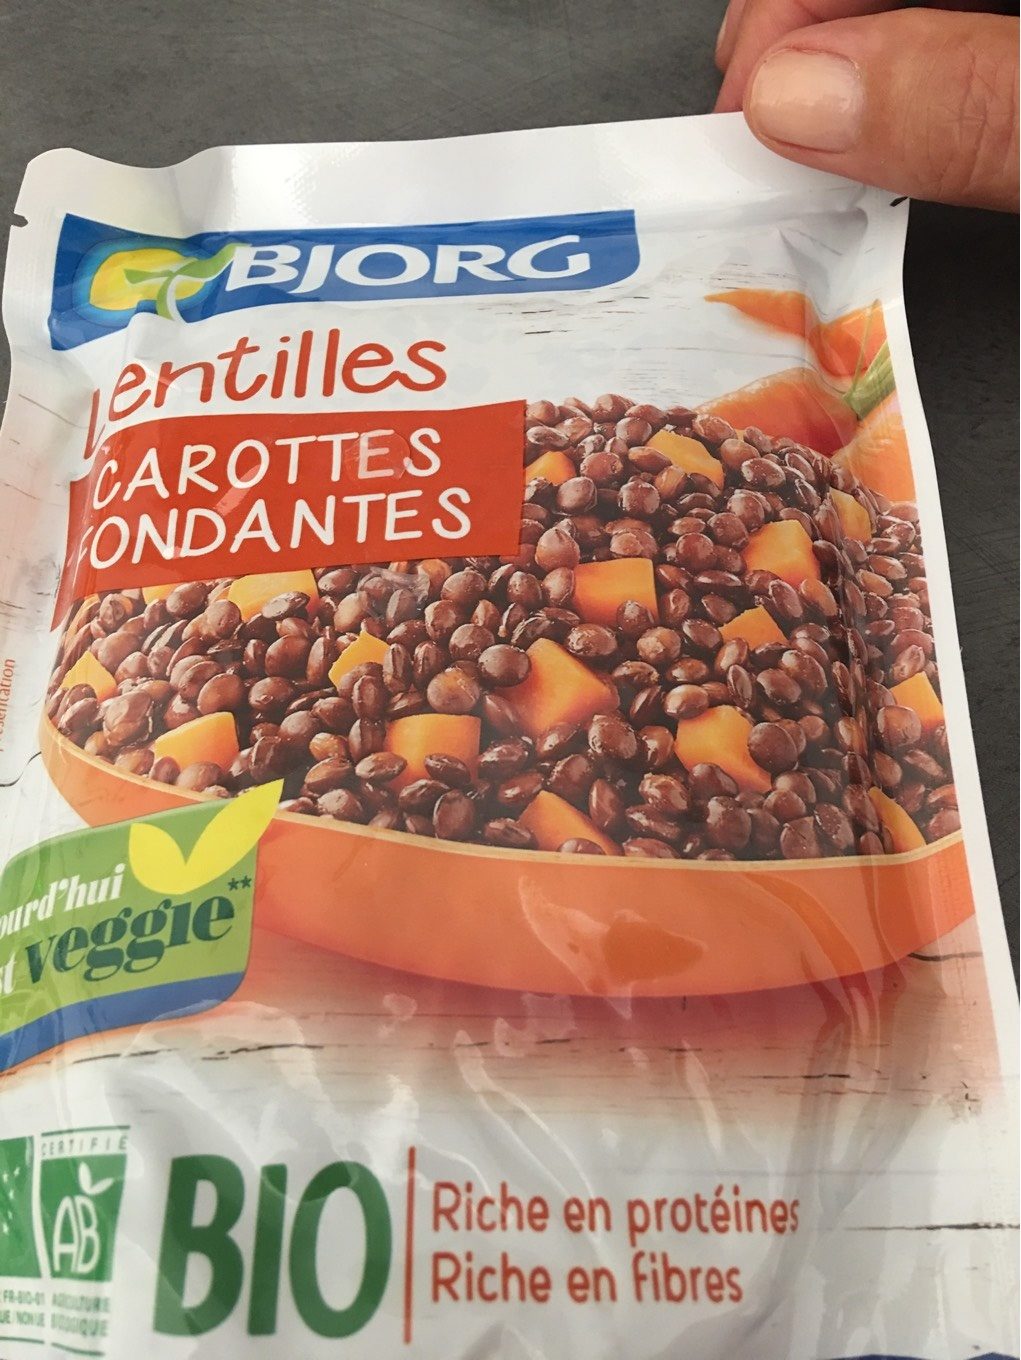 Lentille carotte doy pack bjorg - Product - fr